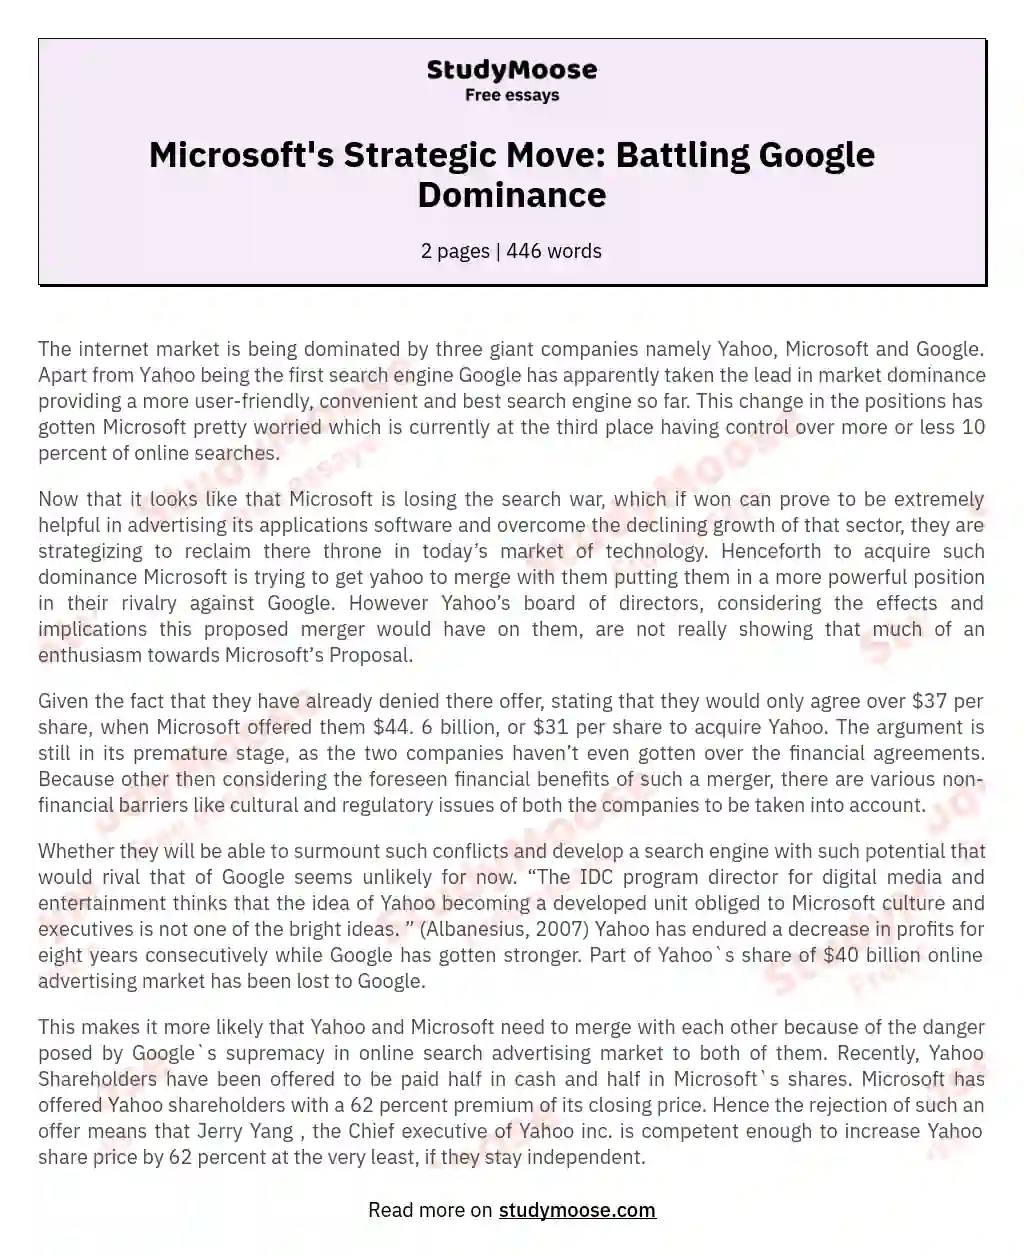 Microsoft's Strategic Move: Battling Google Dominance essay